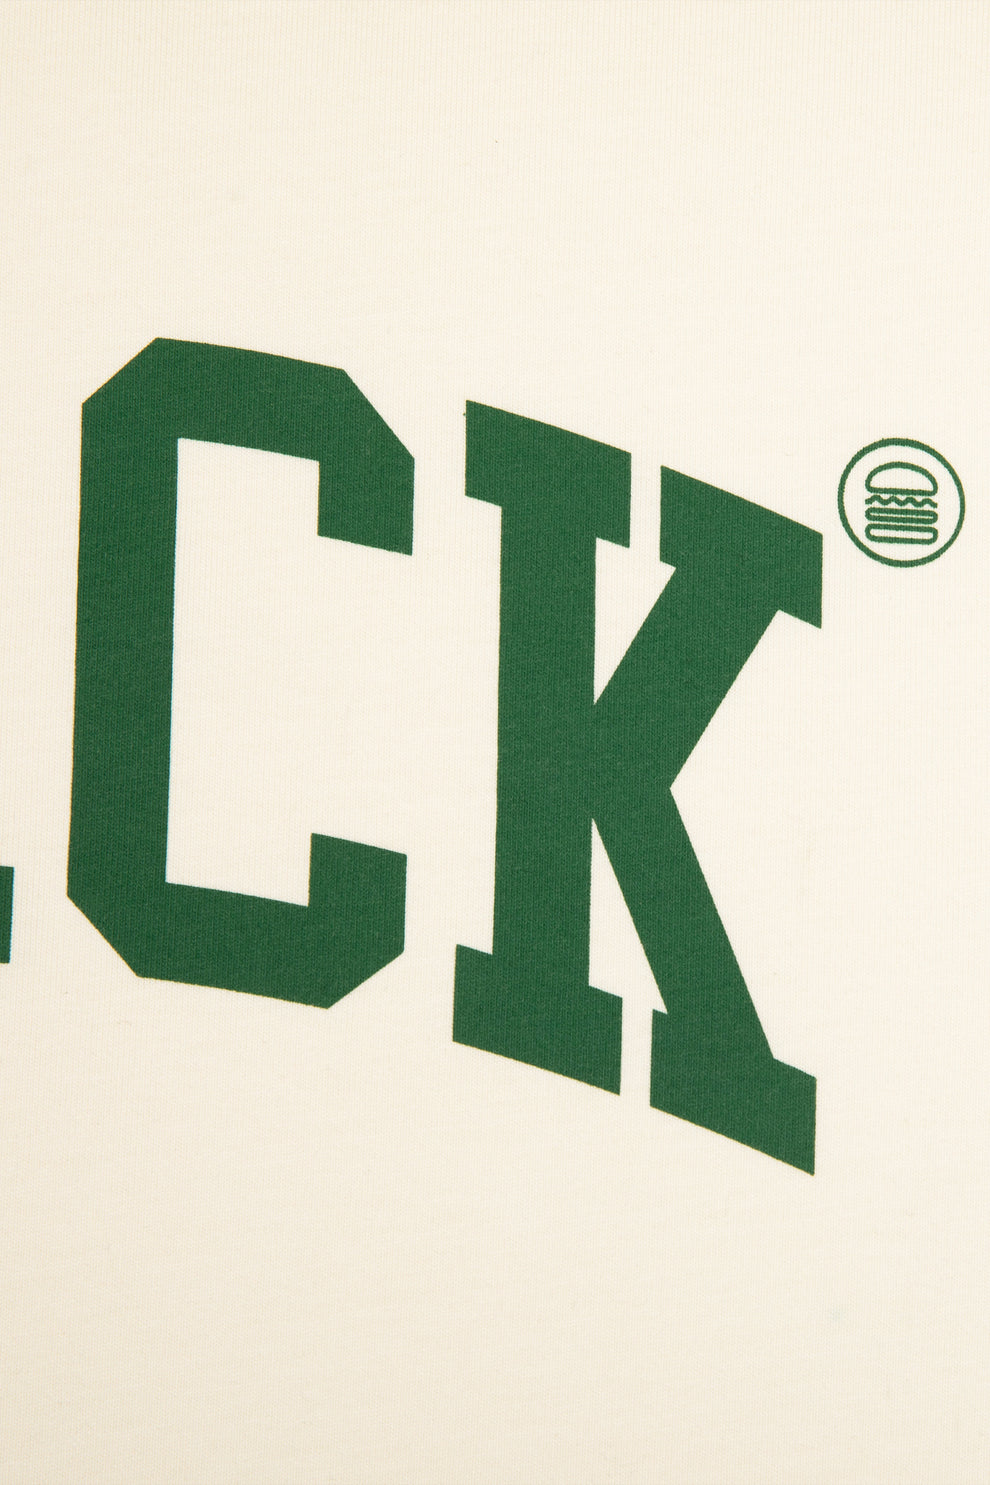 Closeup of the Shake Shack logo above the word "Shack"